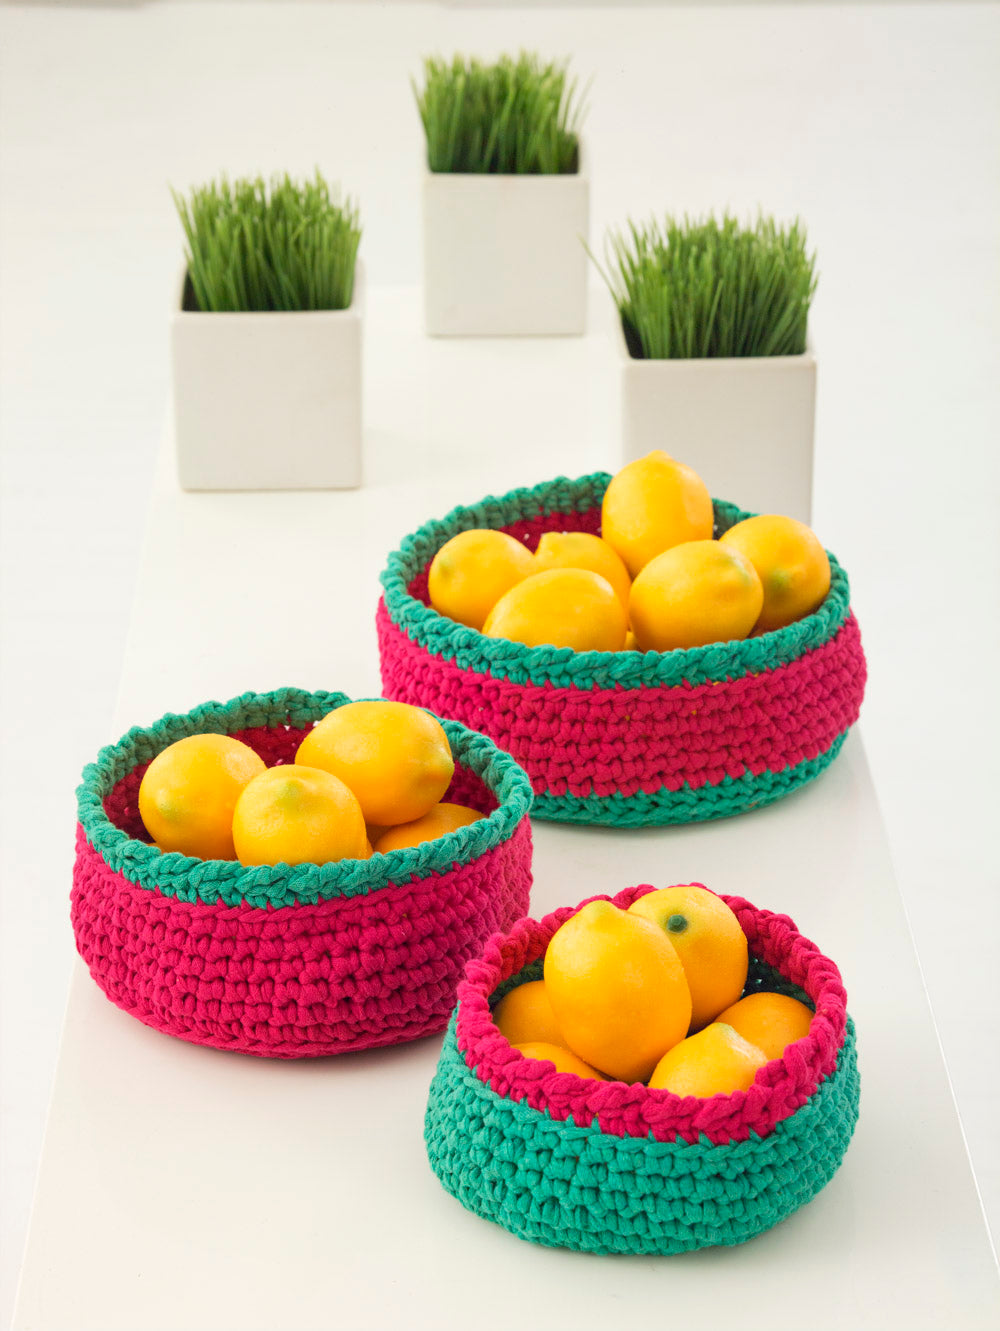 XL Cherry Yarn Bowl with Golden Cypress For Knitting, Crochet, Yarning #653